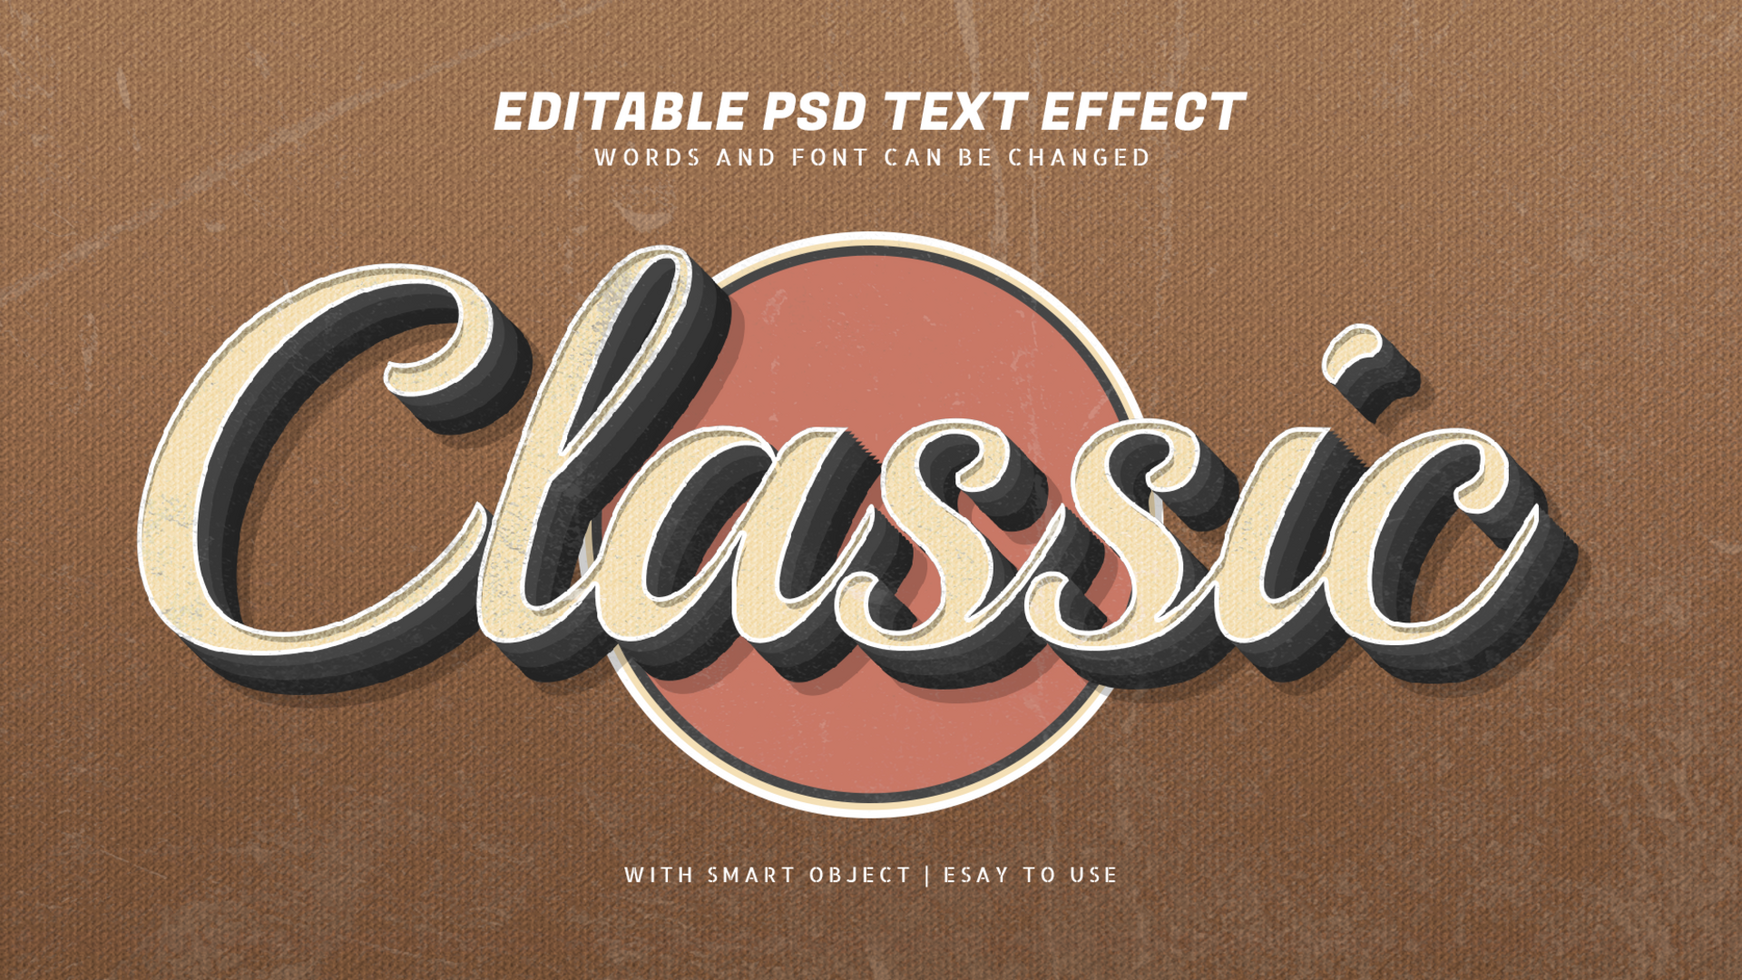 Classic 3d vintage retro style text effect psd